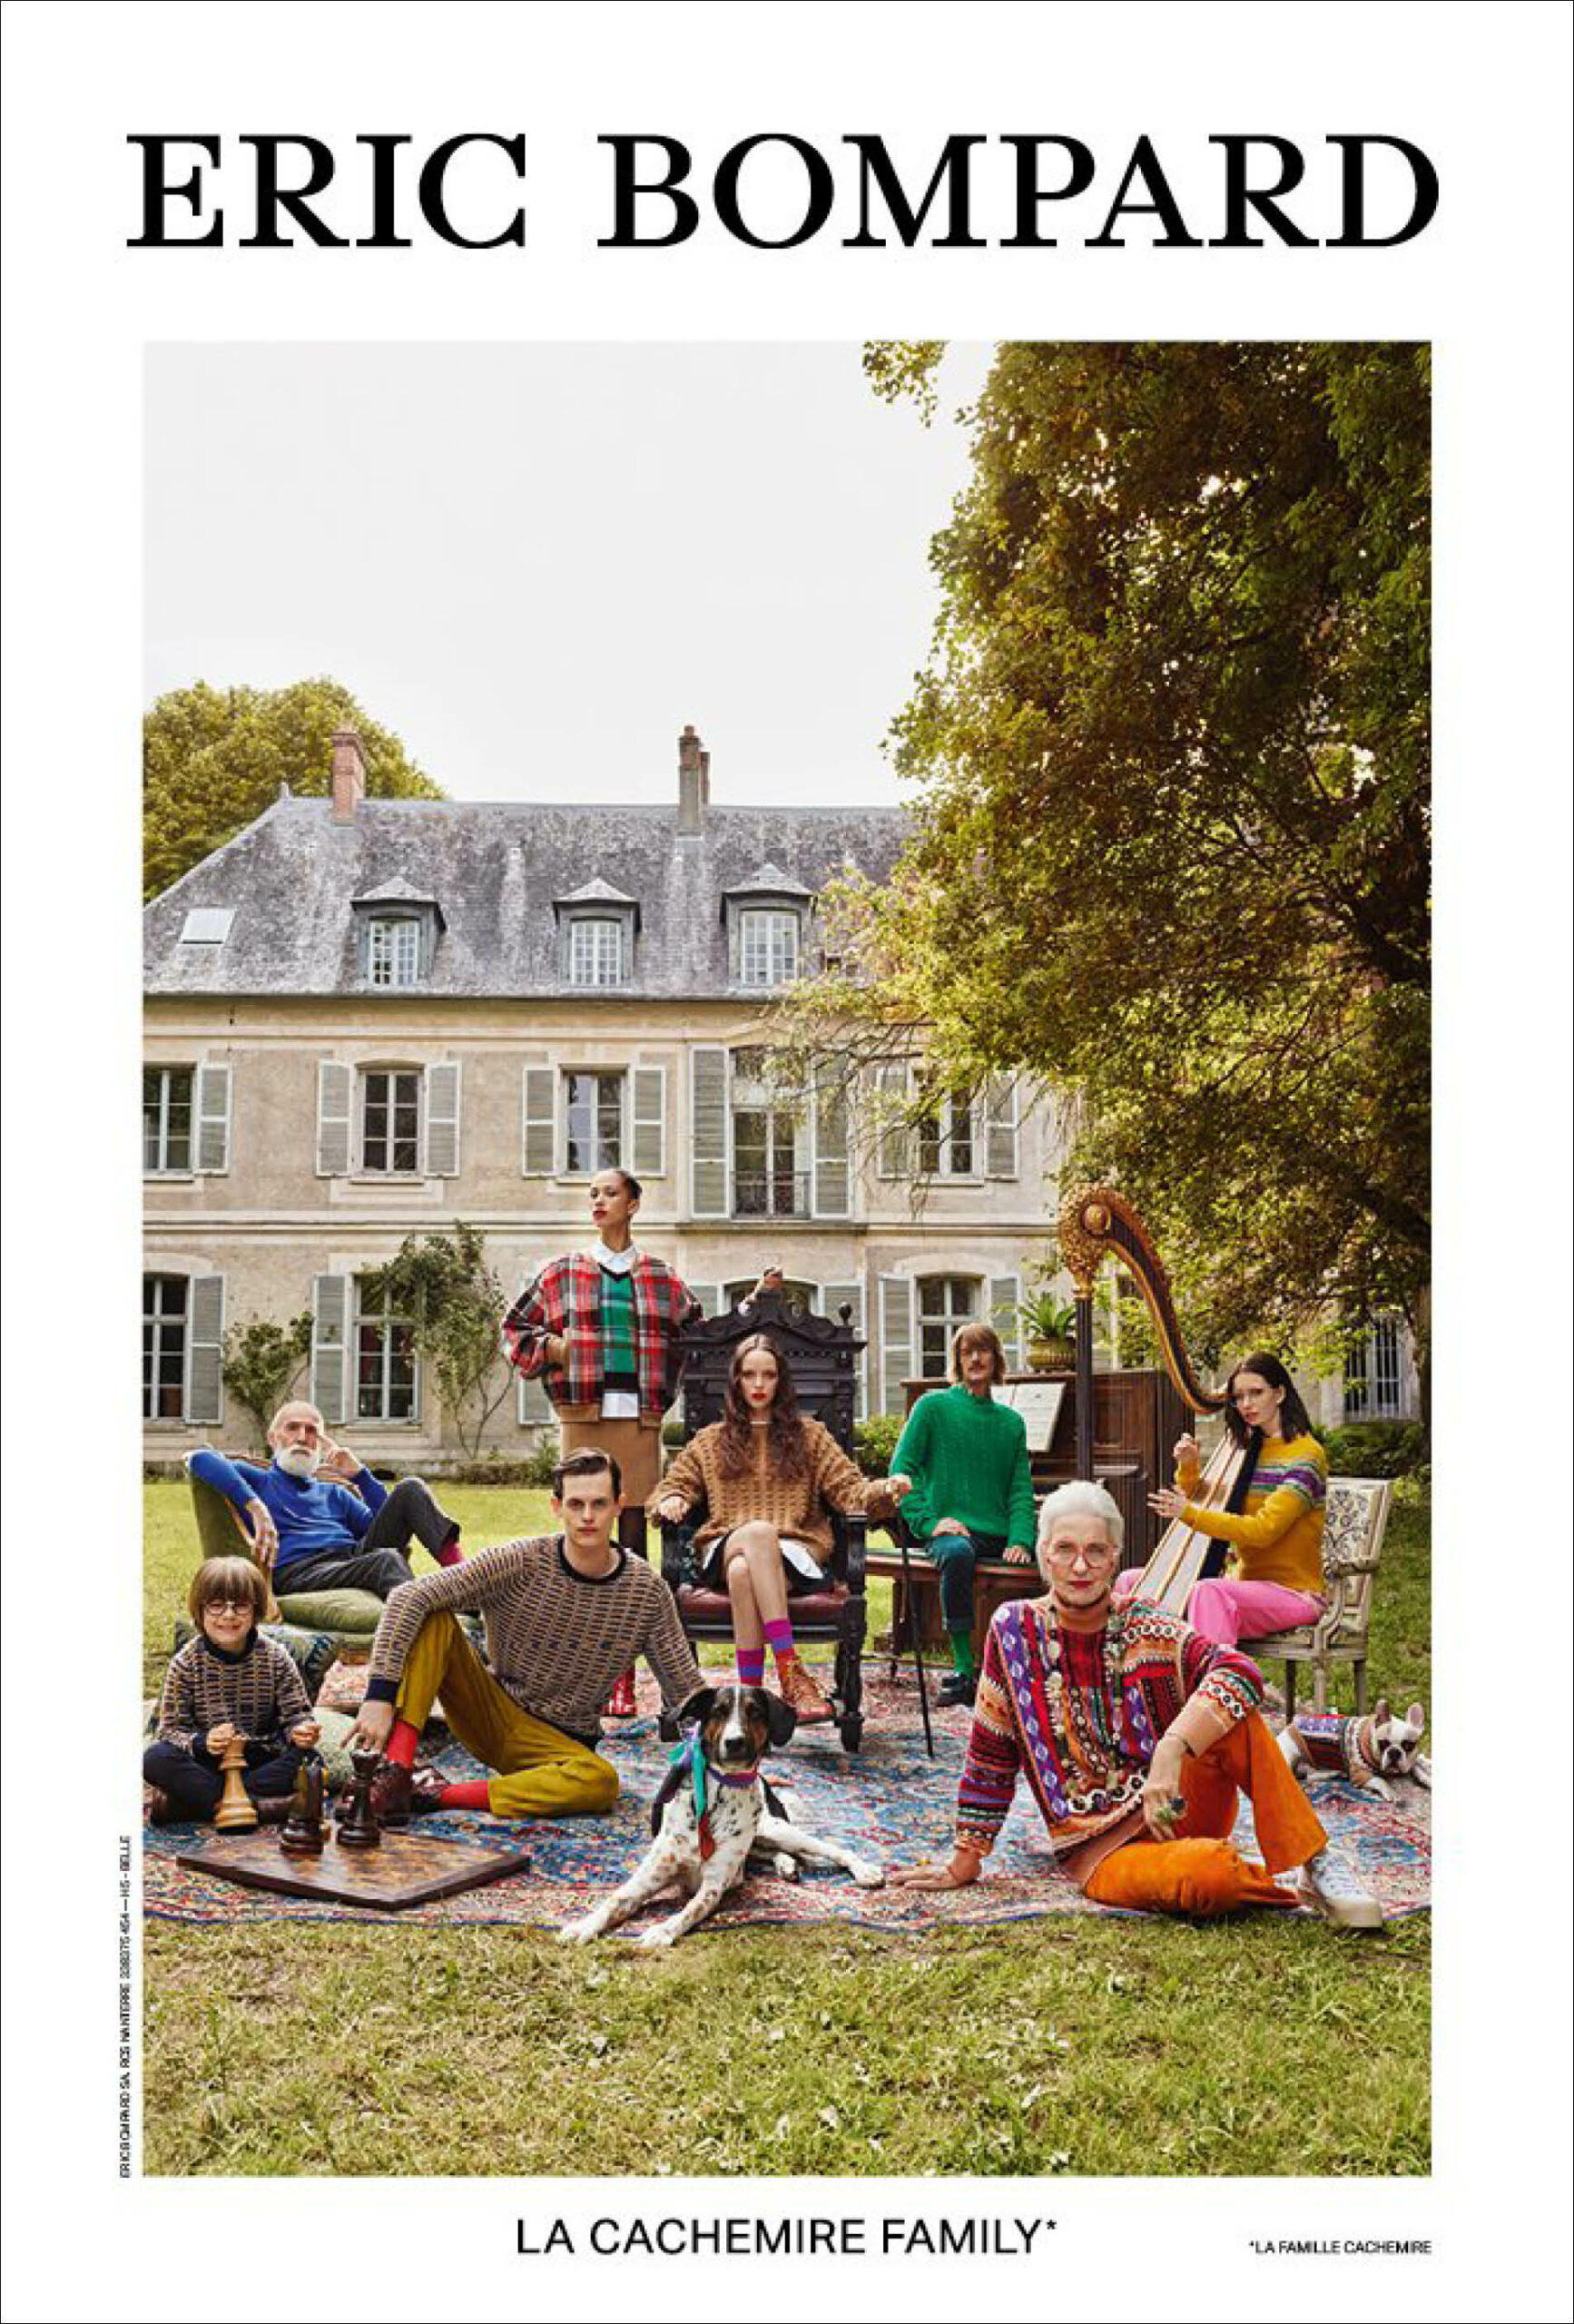 YOHANNES COUSY presents LA CACHEMIRE FAMILY for ÉRIC BOMPARD with Morten Borgestad, Delphine Chanet, Coco Amardeil and ADRIEN POUJADE | TALENT MANAGEMENT - Set Design